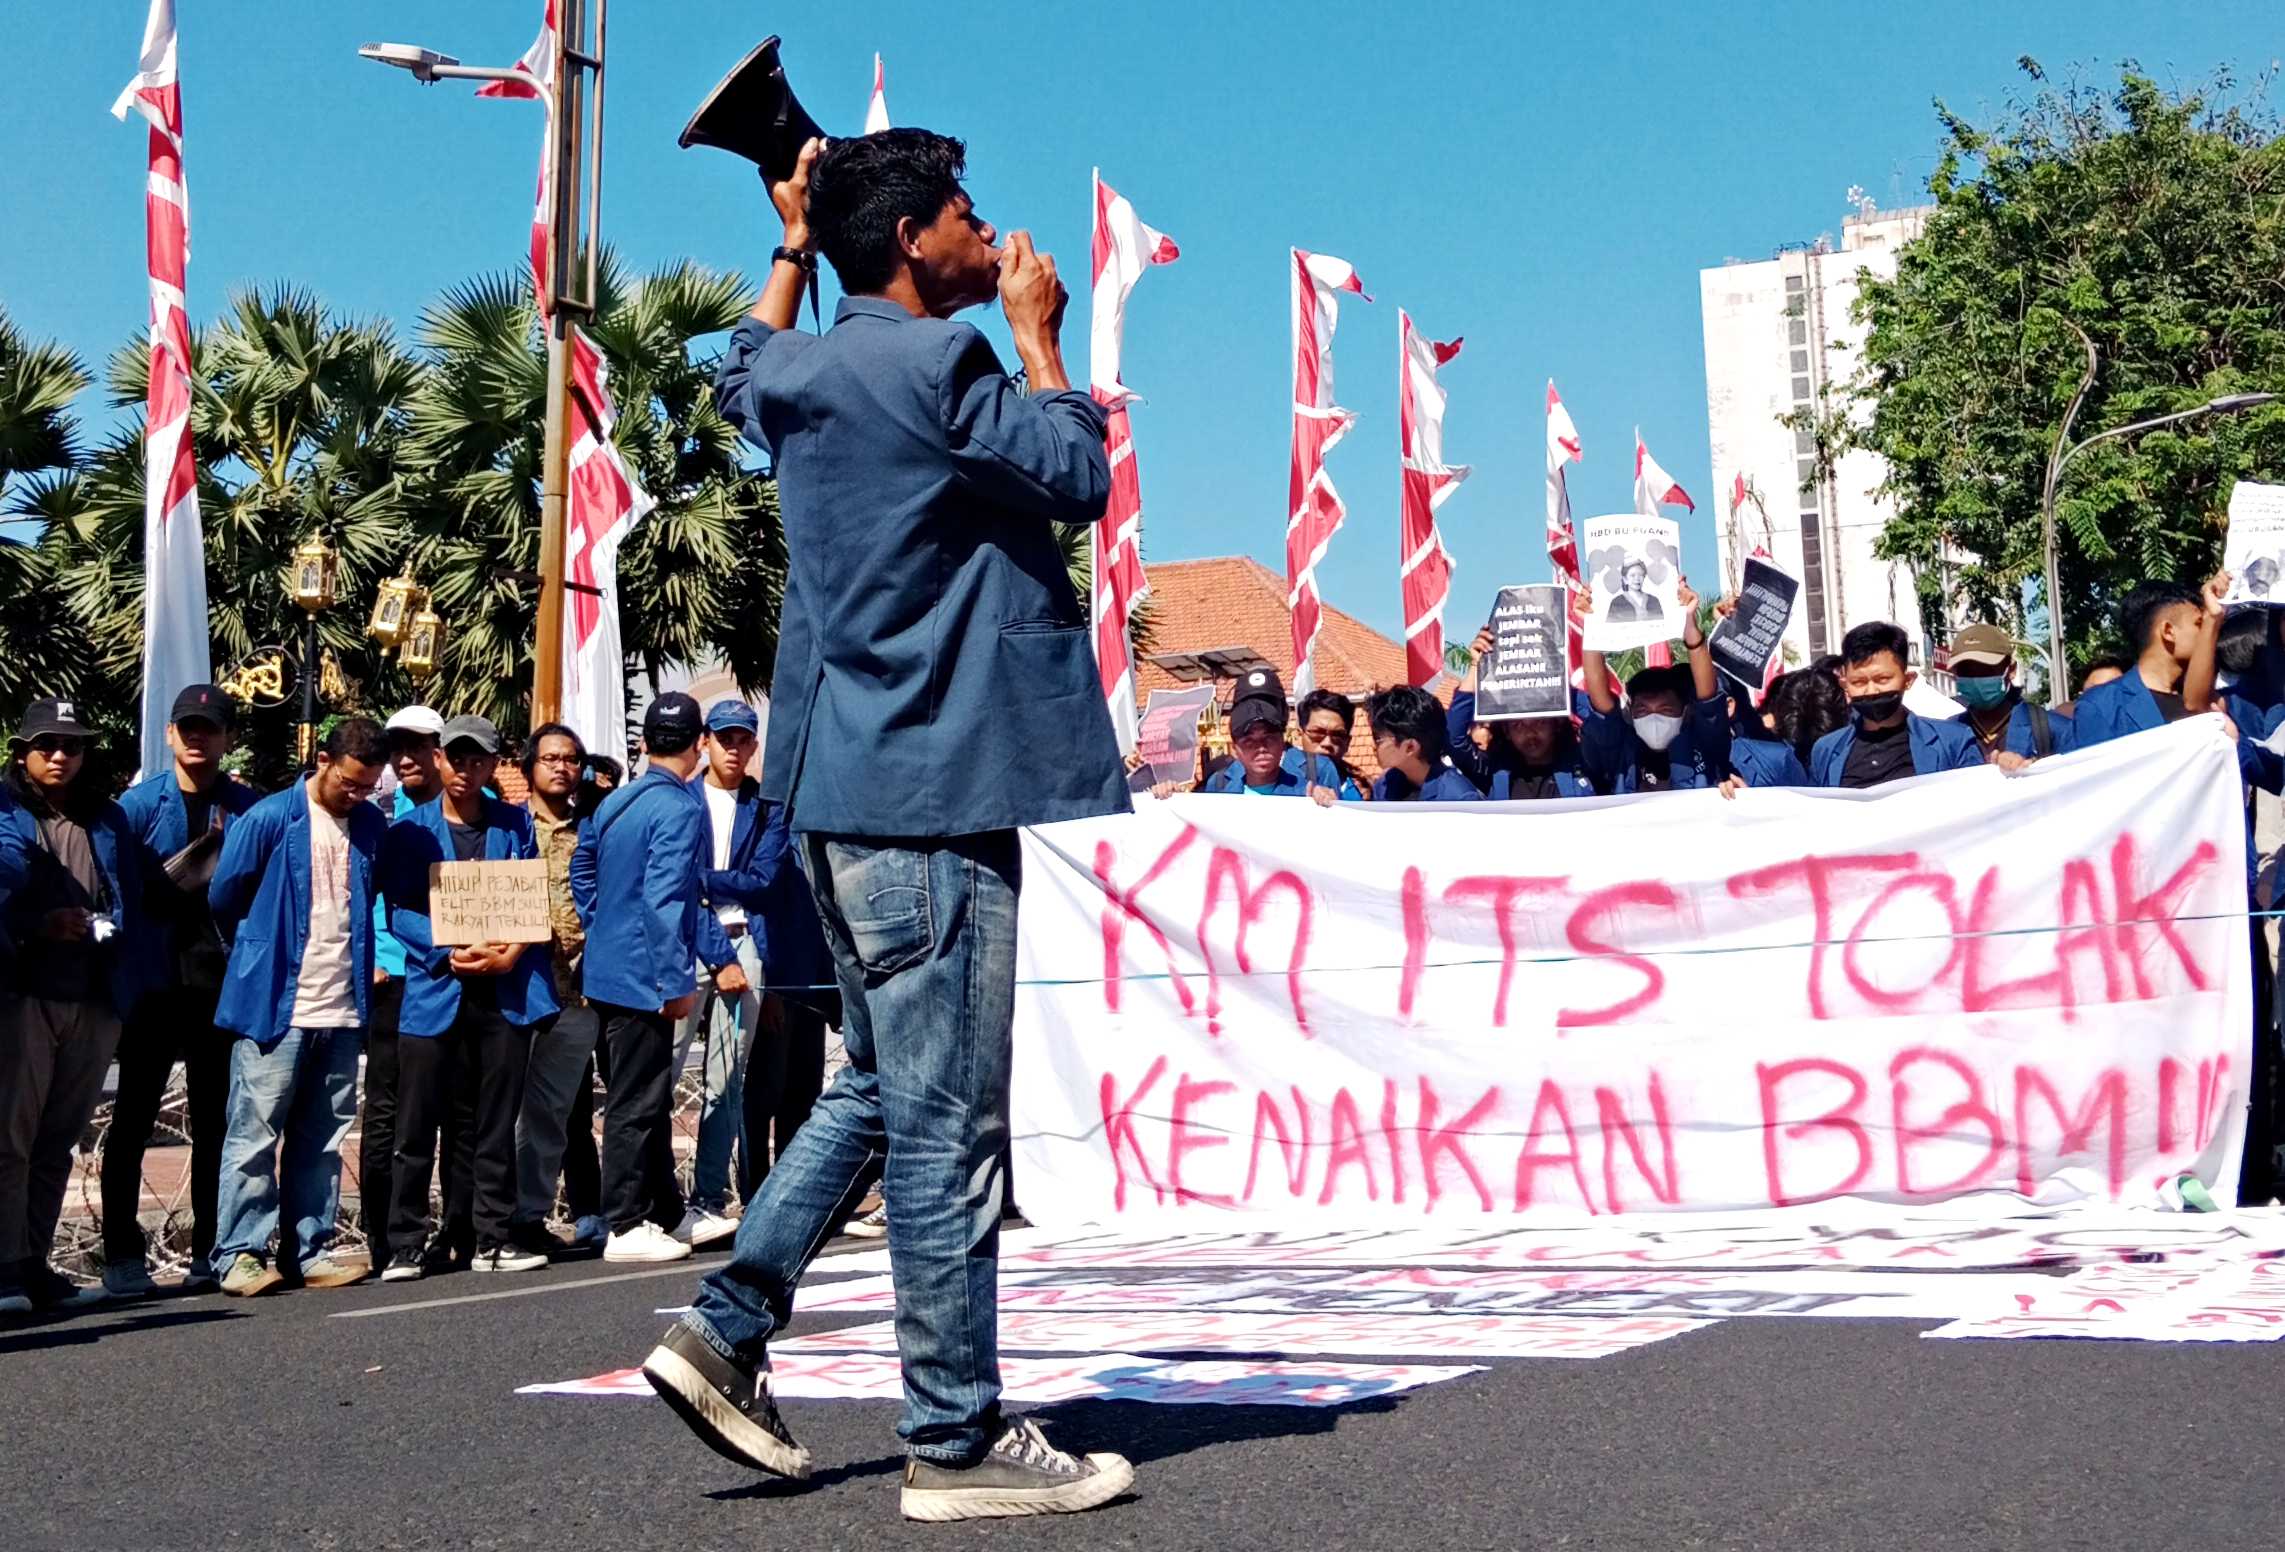 Datang dari Segala Penjuru, Demonstrasi Tolak Kenaikan BBM di Surabaya